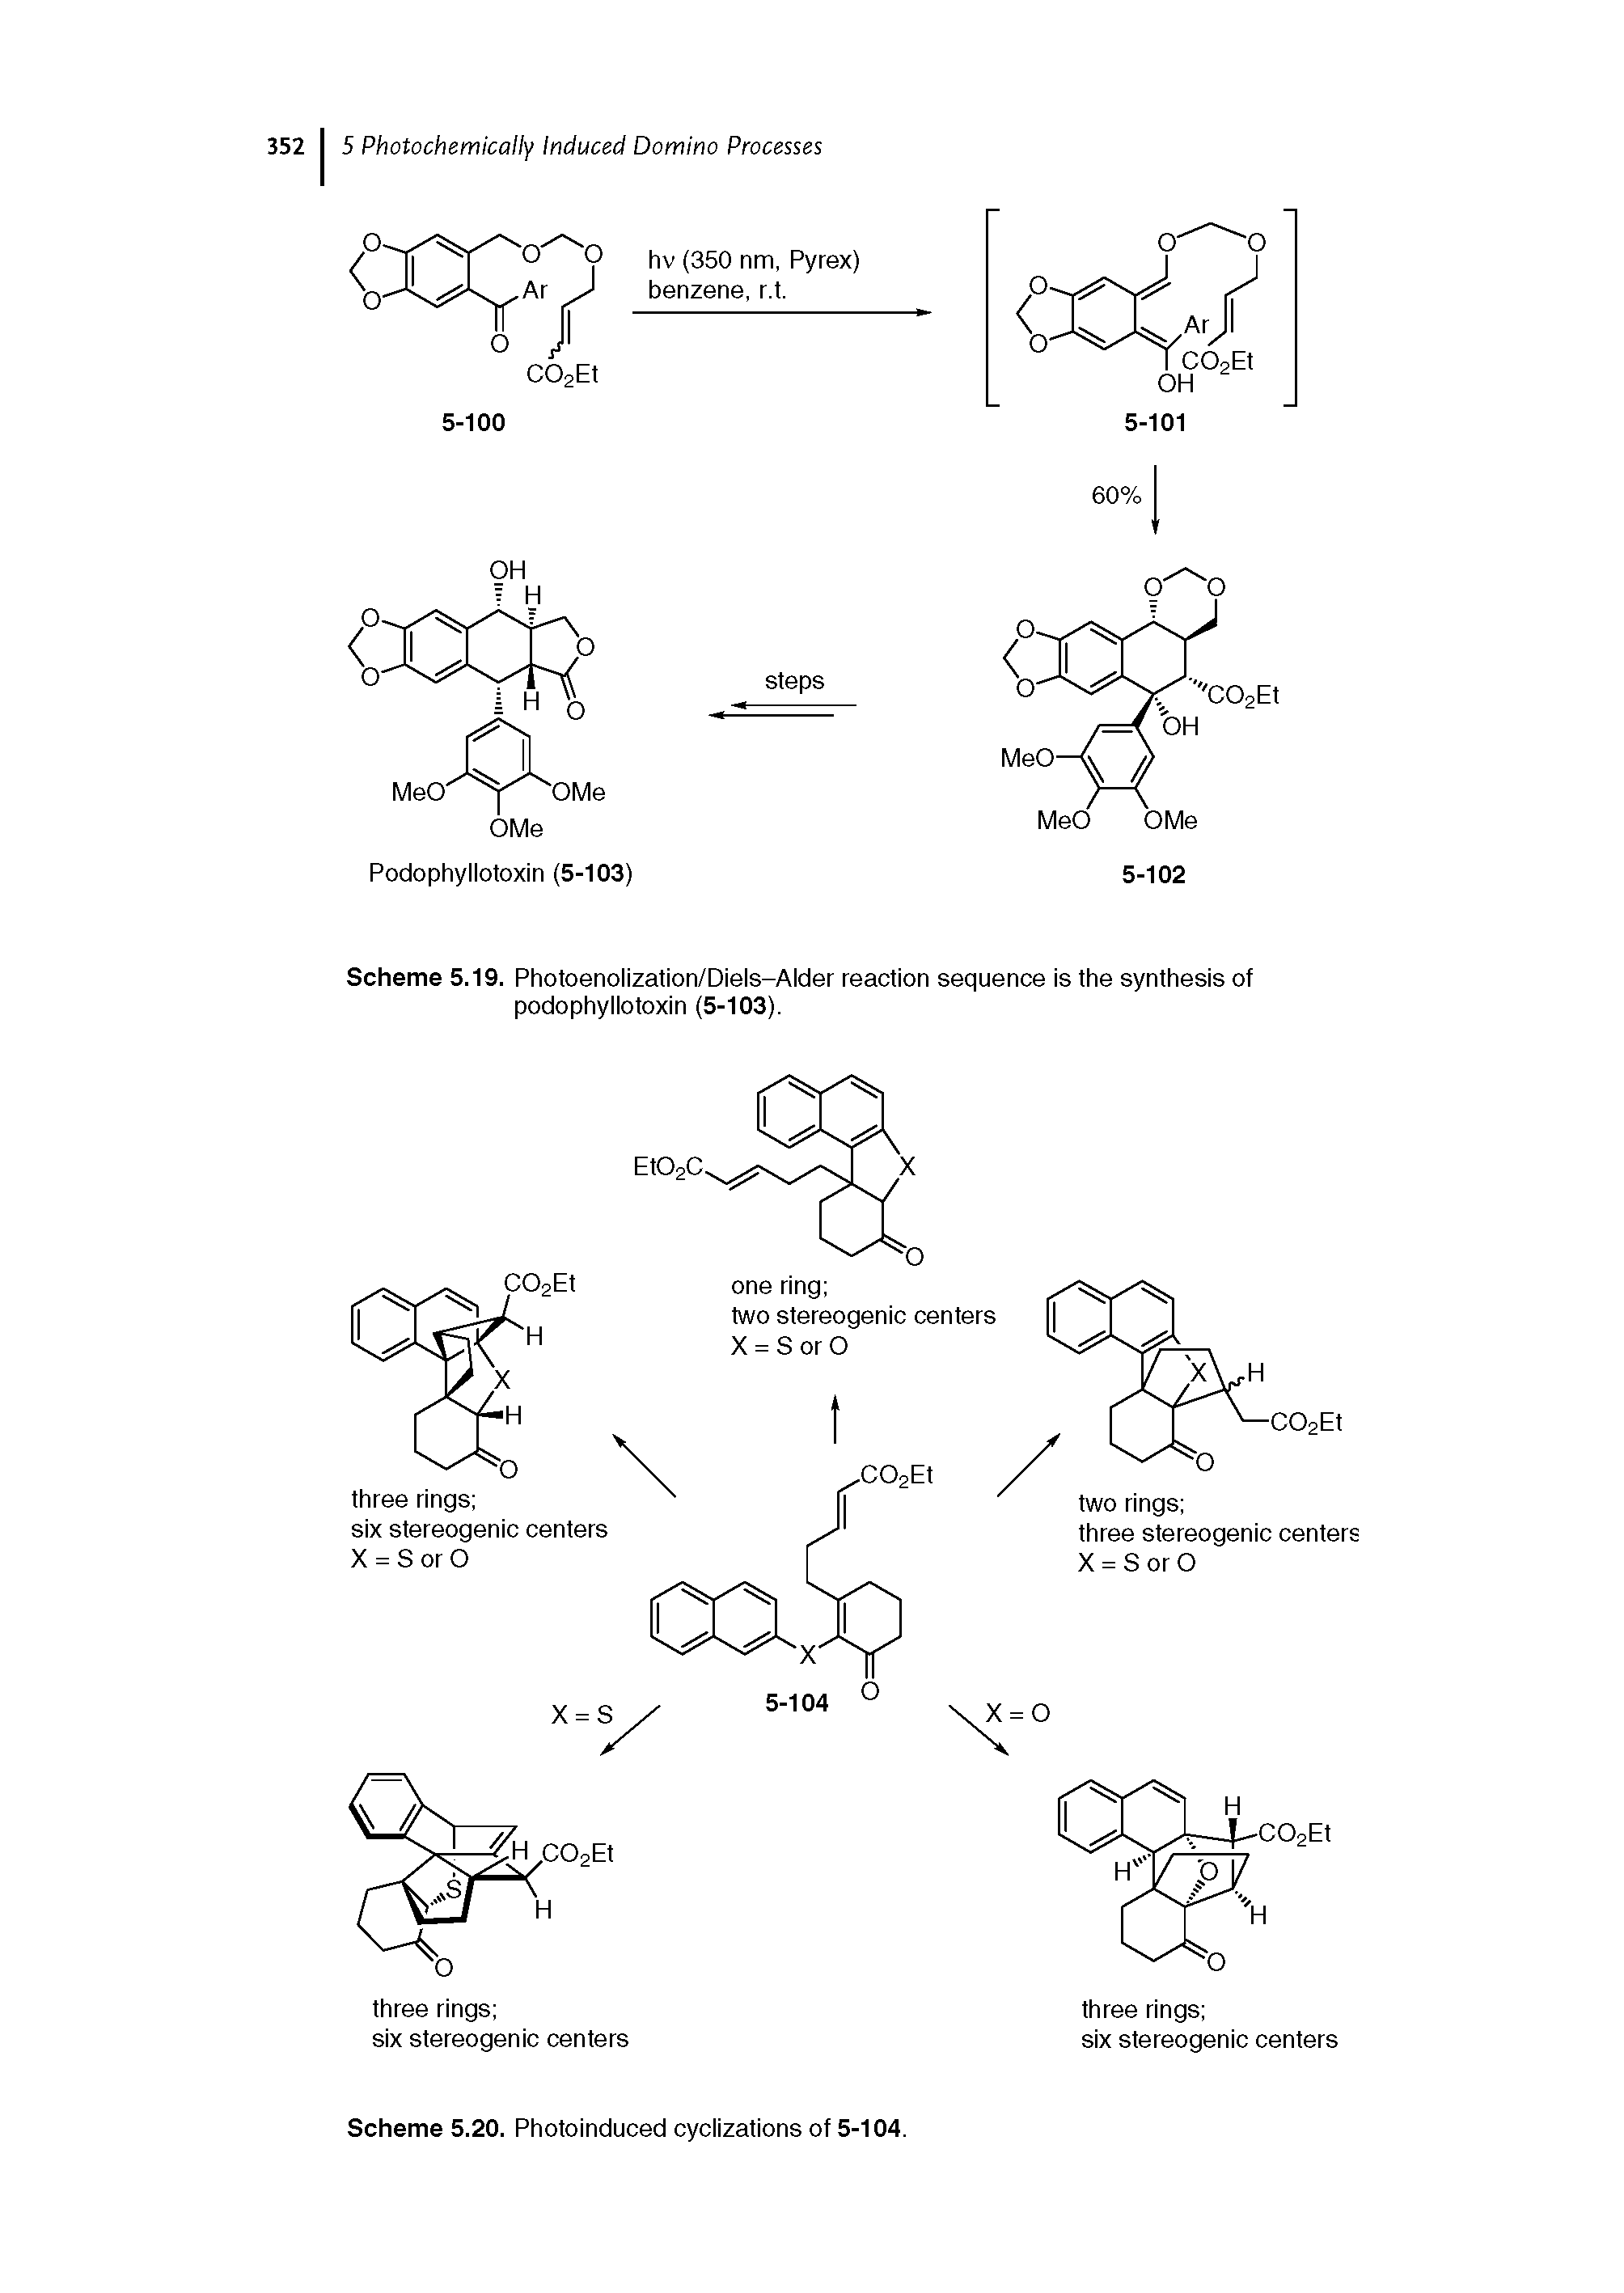 Scheme 5.19. Photoenolization/Diels-Alder reaction sequence is the synthesis of podophyllotoxin (5-103).